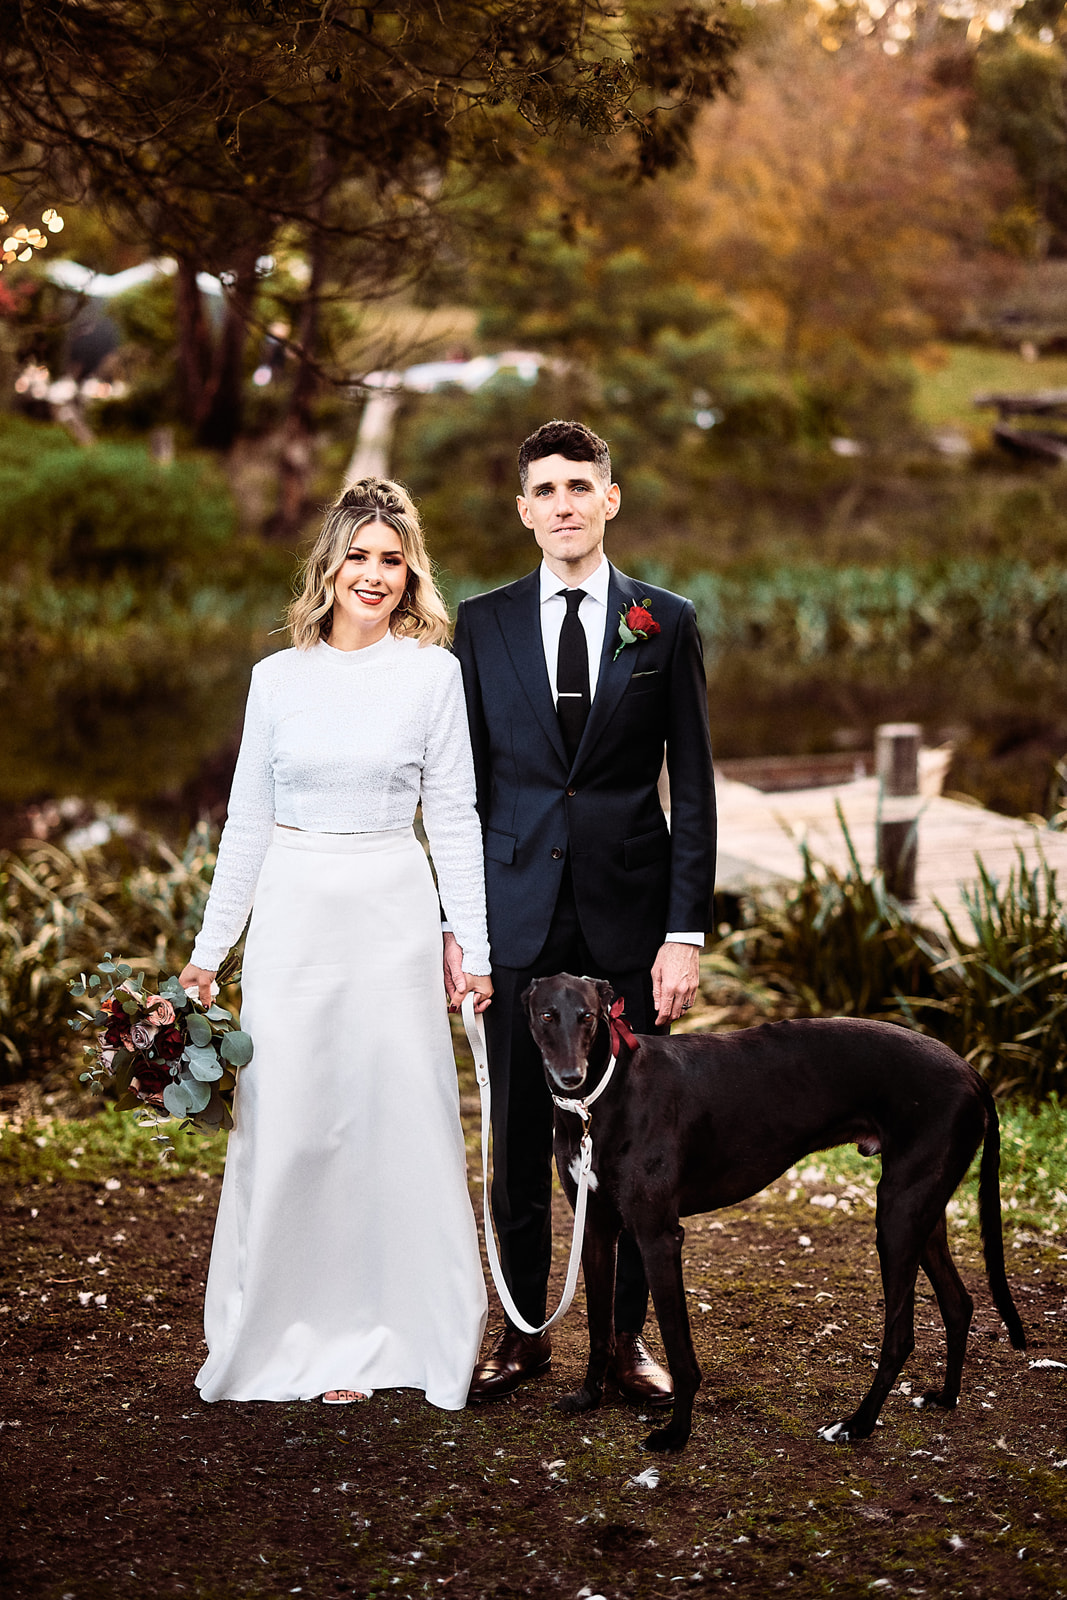 Greyhound wedding photo